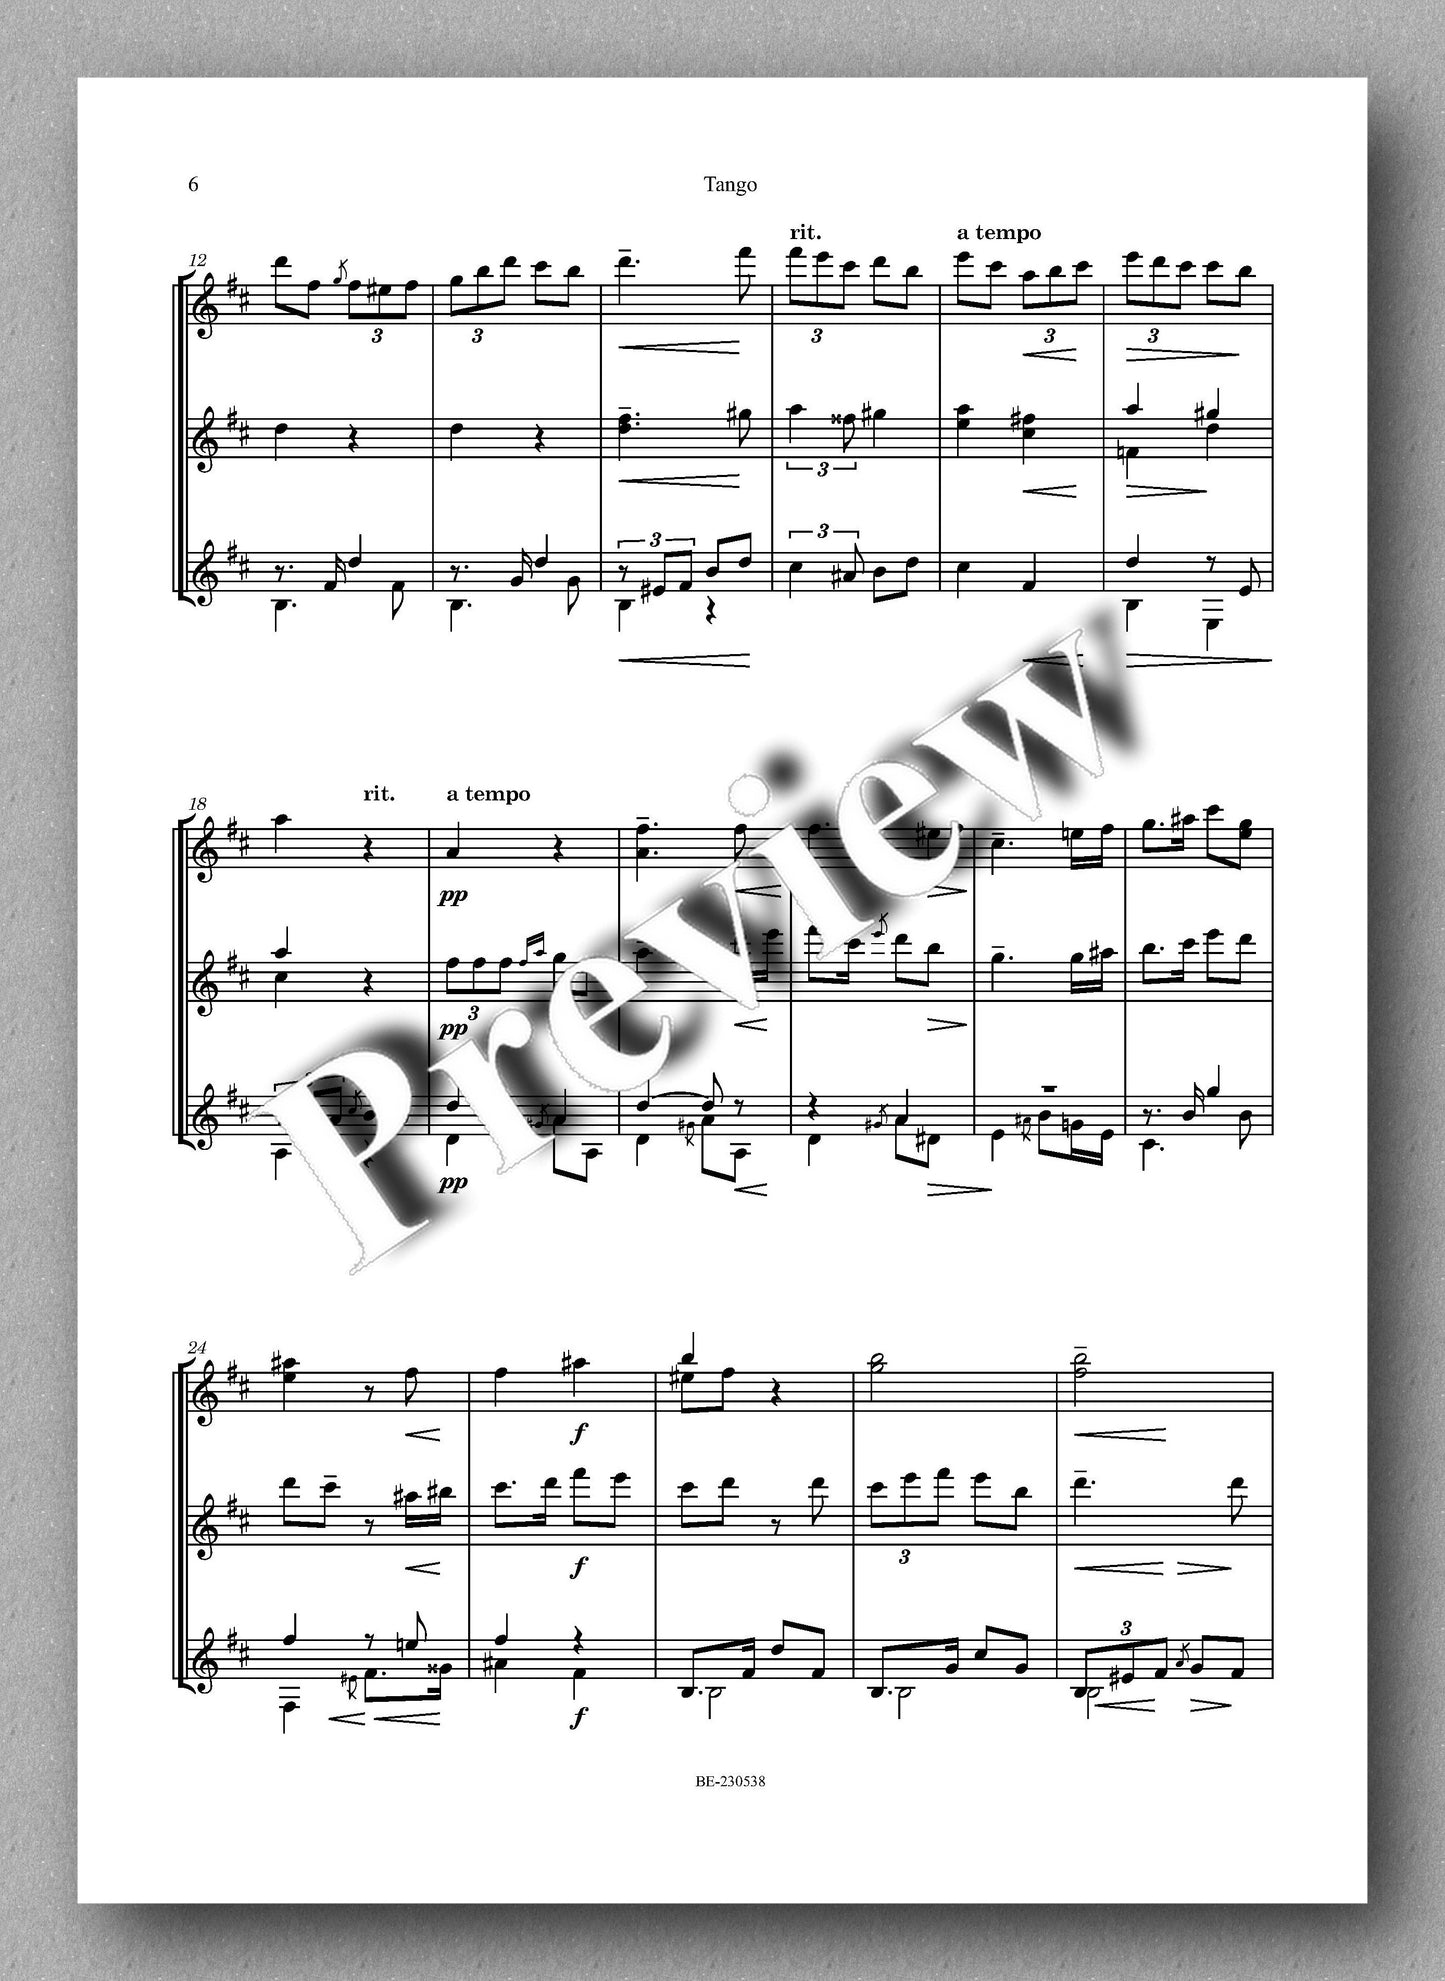 Albéniz-Burley, Tango - preview of the music score 2